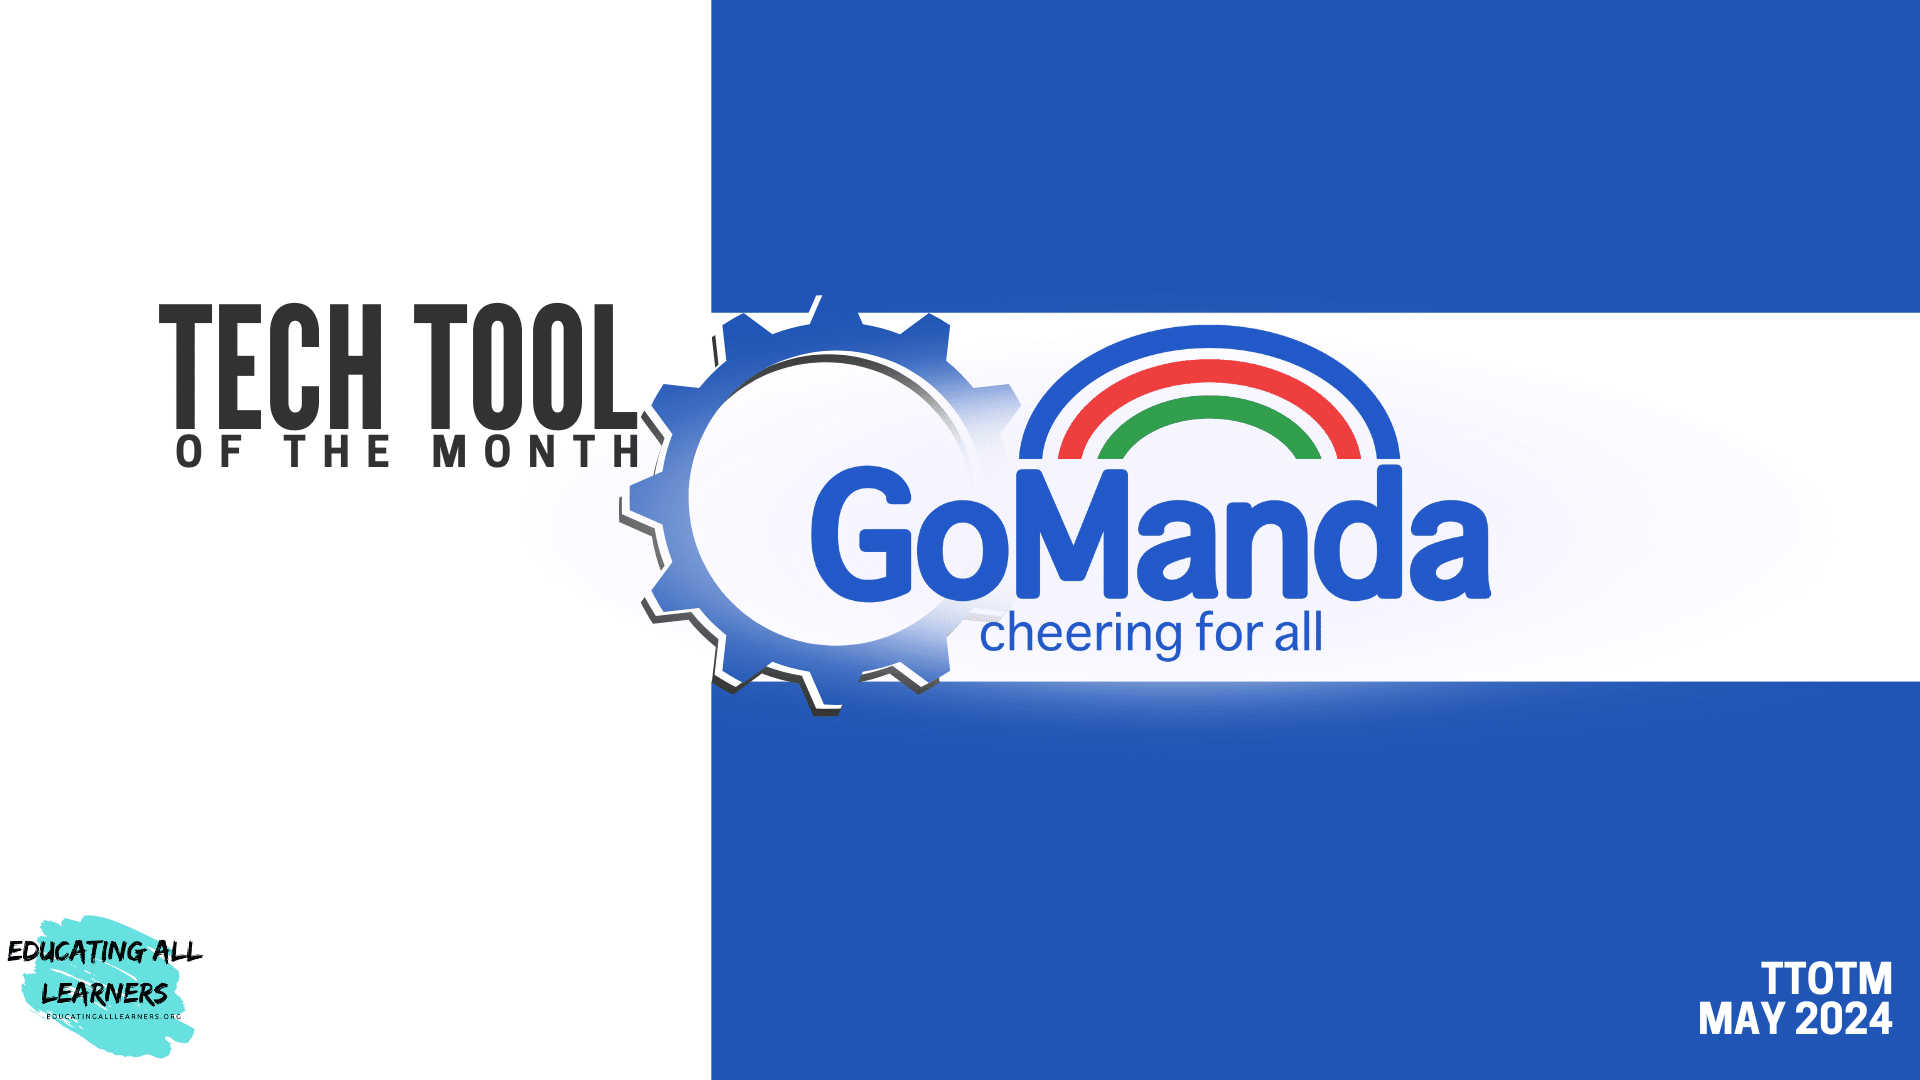 Tech tool of the month: GoManda